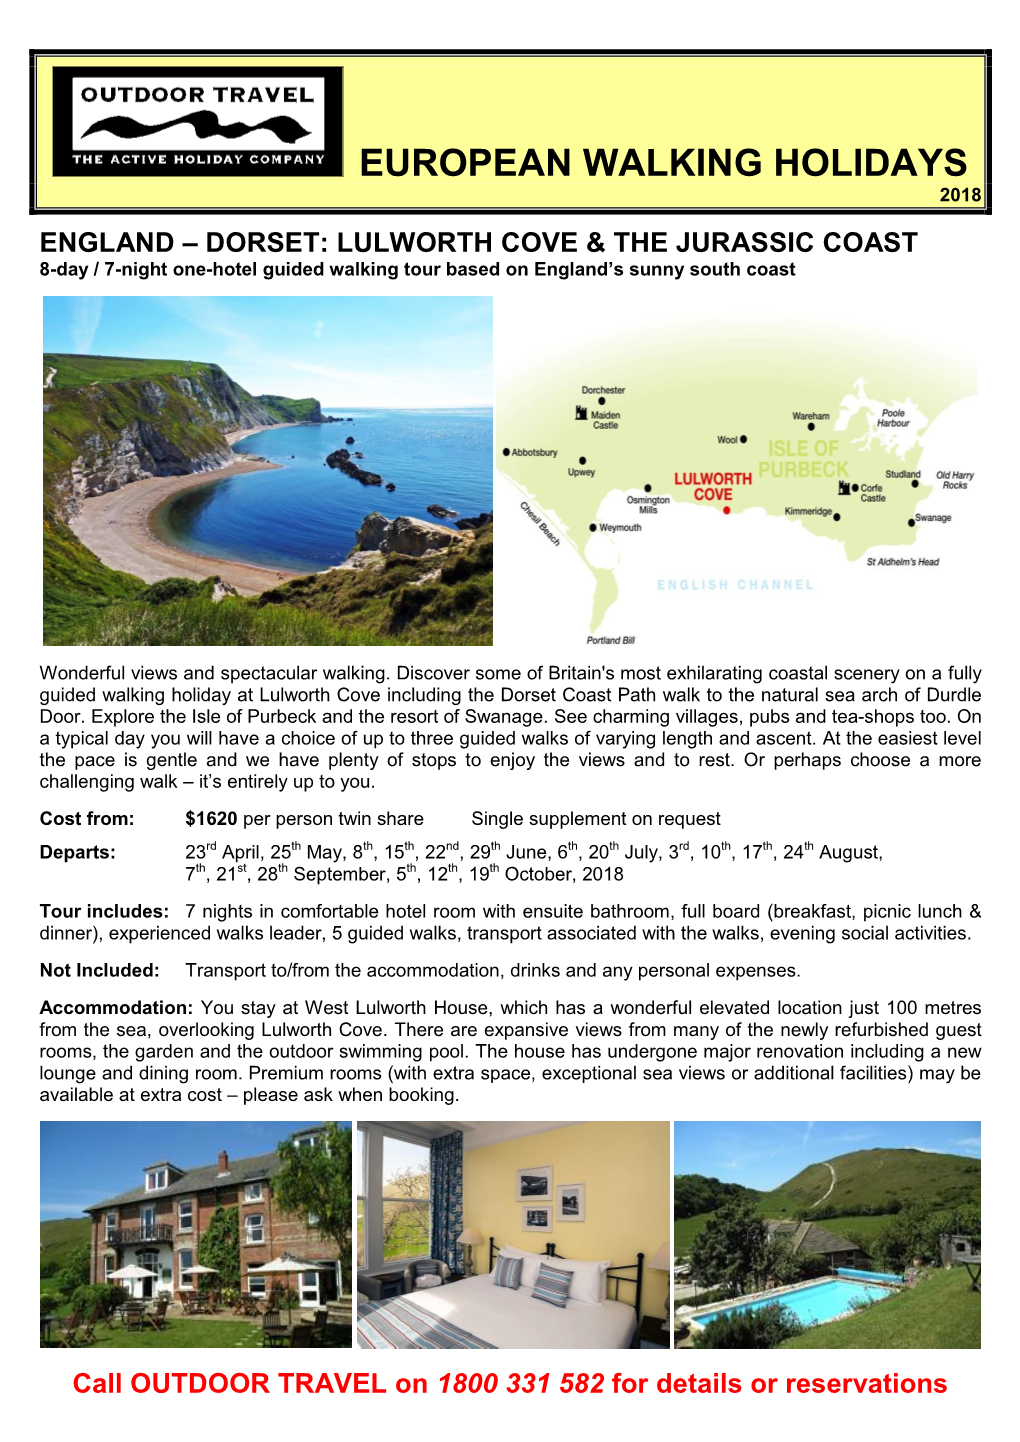 ENGLAND – DORSET: LULWORTH COVE & the JURASSIC COAST 8-Day / 7-Night One-Hotel Guided Walking Tour Based on England’S Sunny South Coast